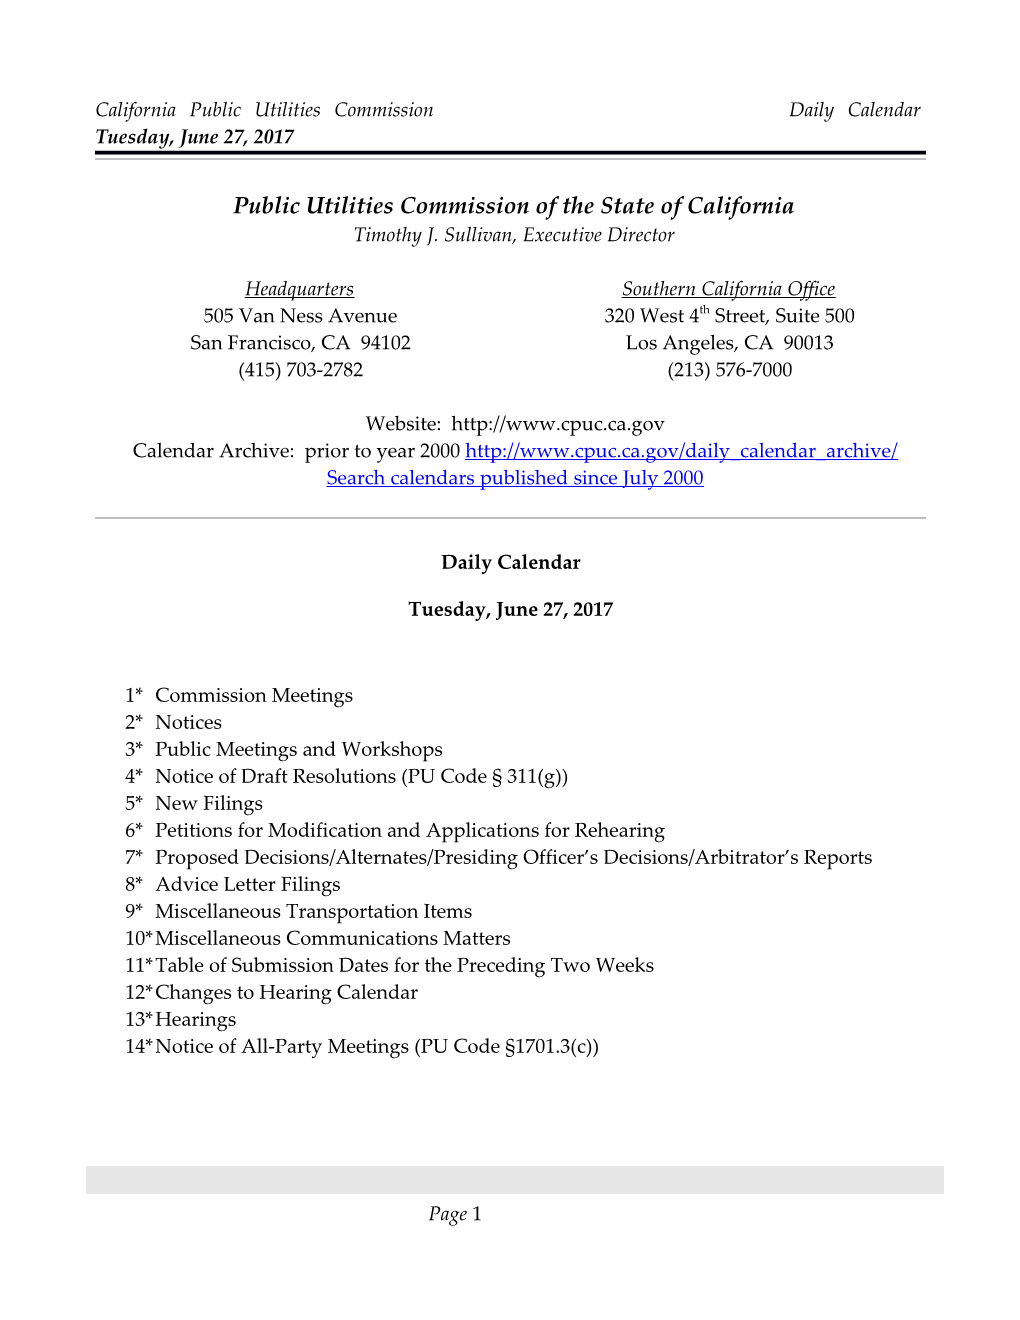 California Public Utilities Commission Daily Calendar Tuesday, June 27, 2017